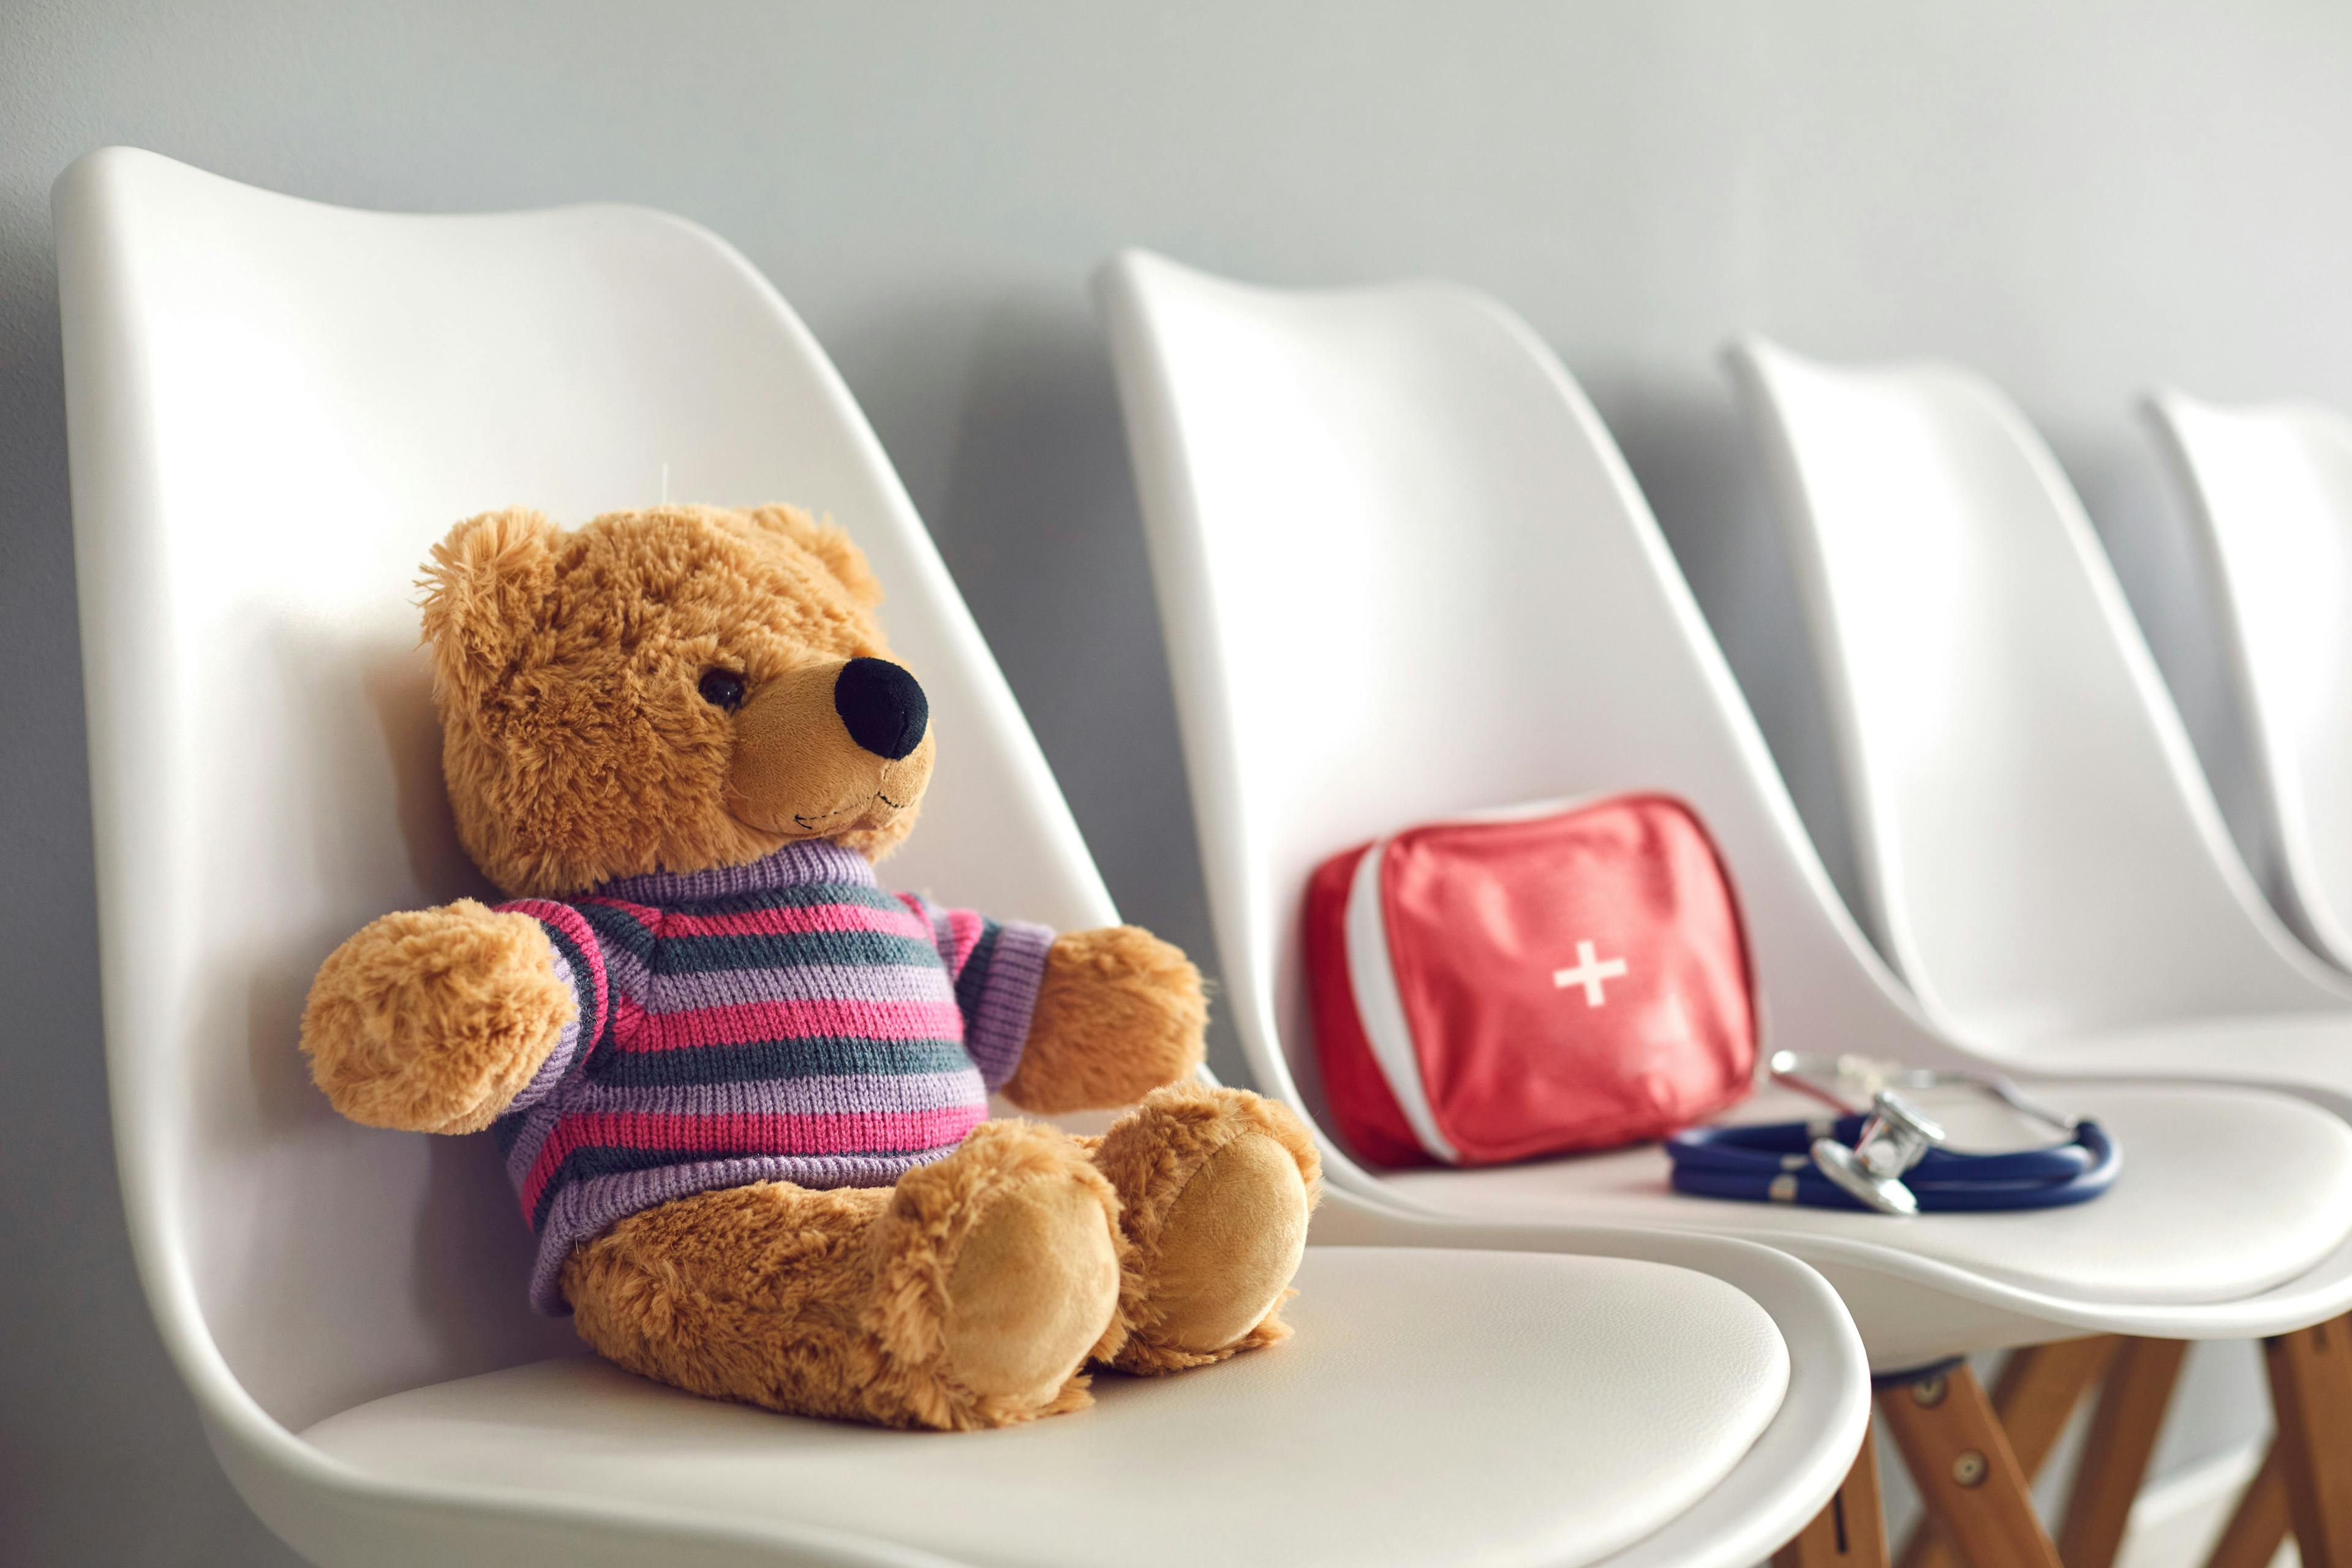 Teddy Bear in Waiting Room, Pediatric Care Concept | Image credit: Studio Romantic - stock.adobe.com